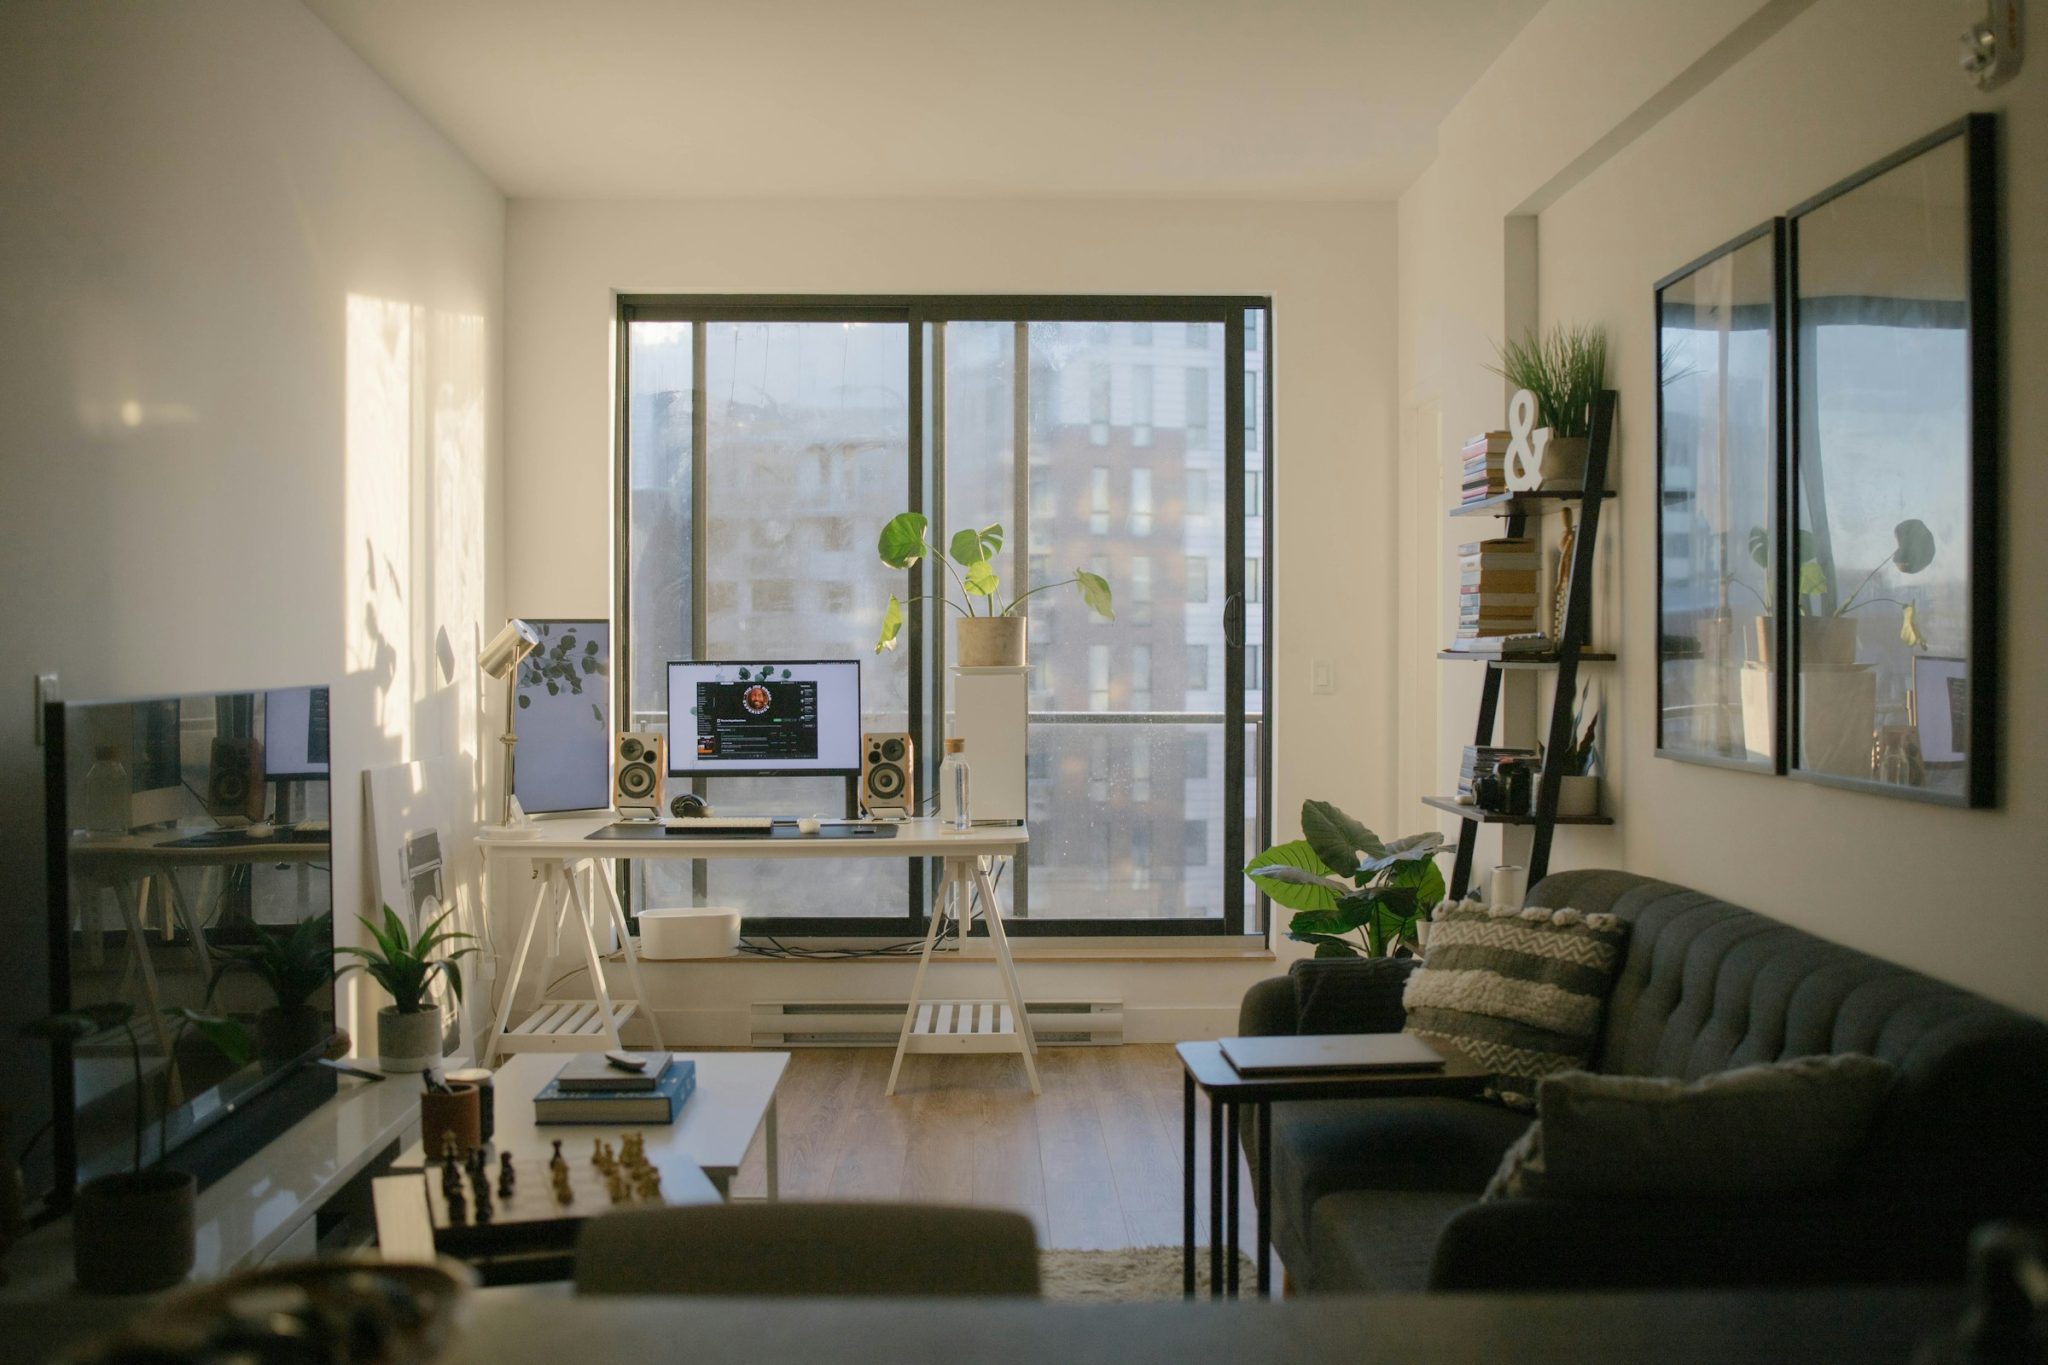 The wellness workspace: how to craft an ergonomic home office setup